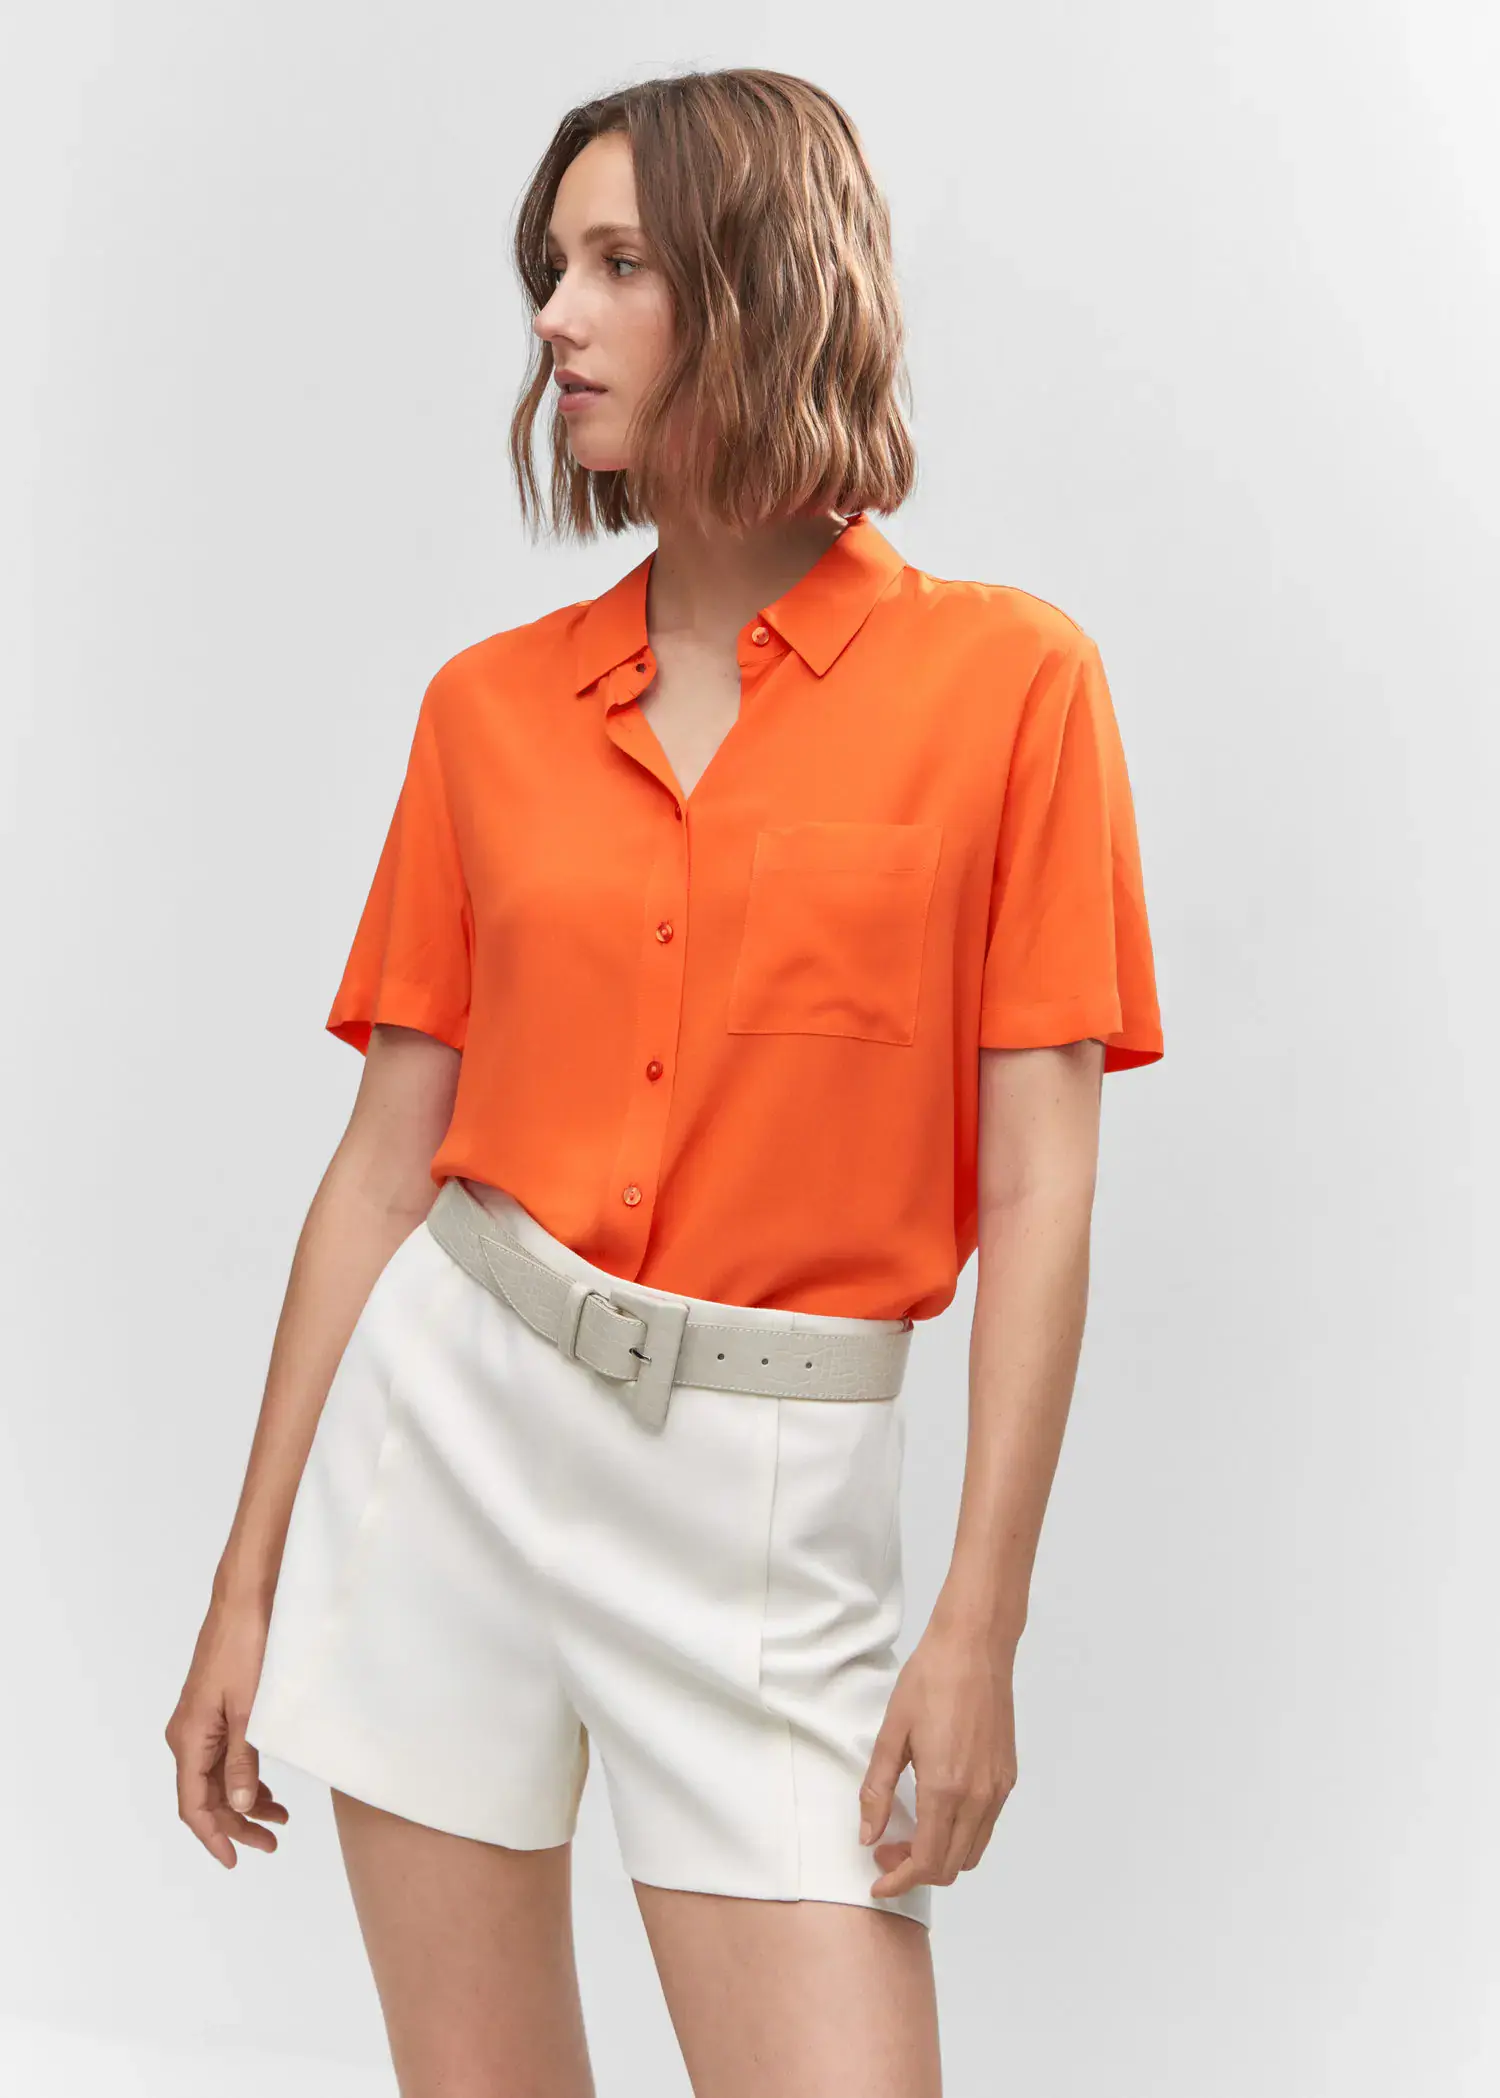 Mango Pocket oversize shirt. a woman wearing a bright orange shirt and white shorts. 